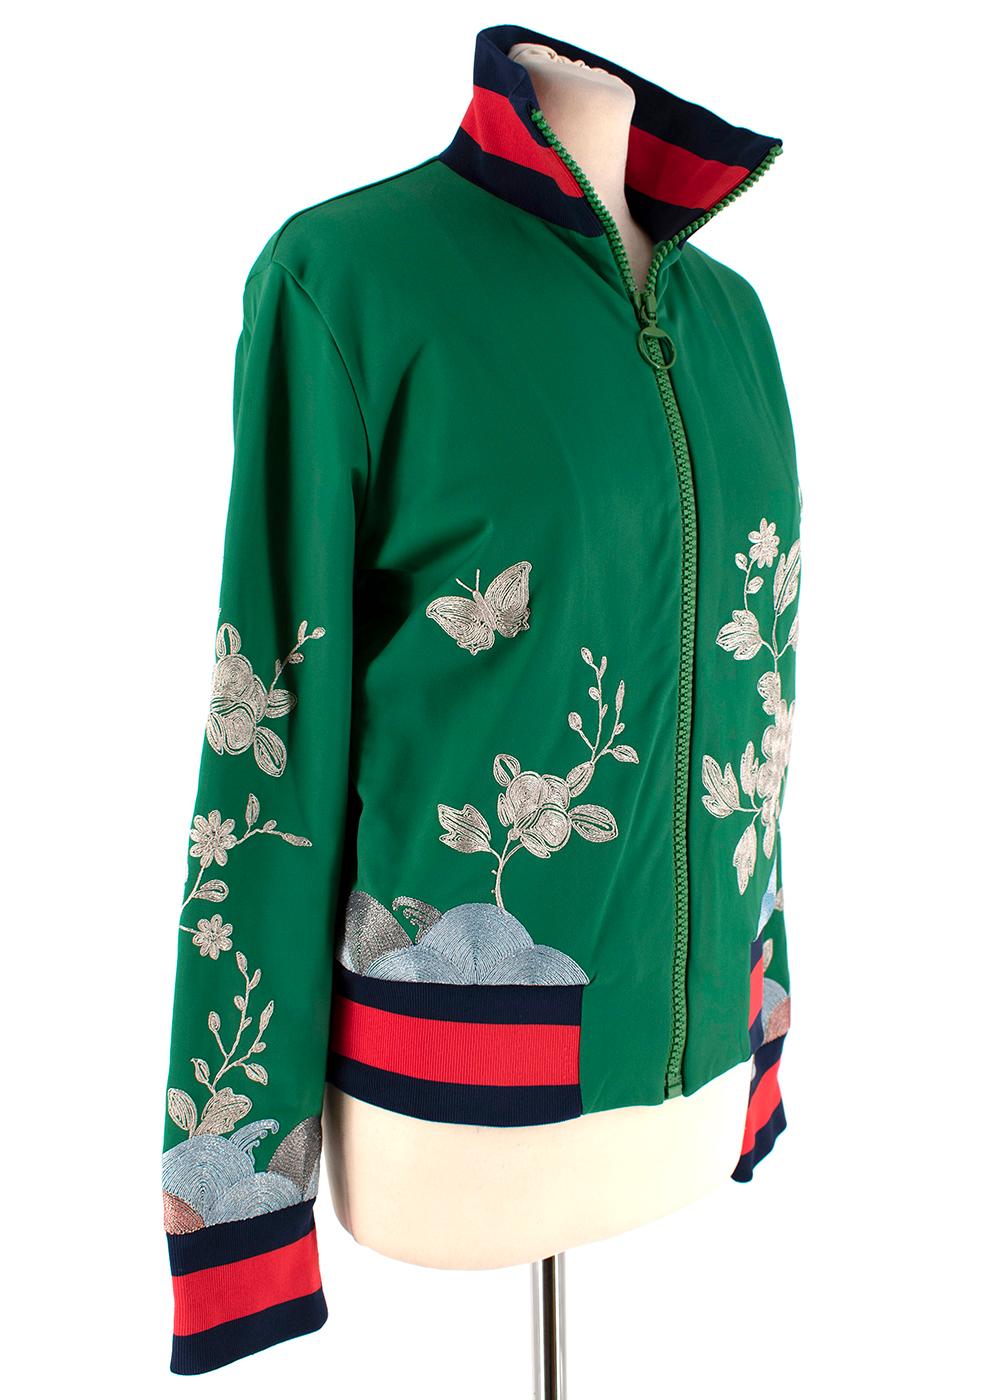 gucci flower jacket